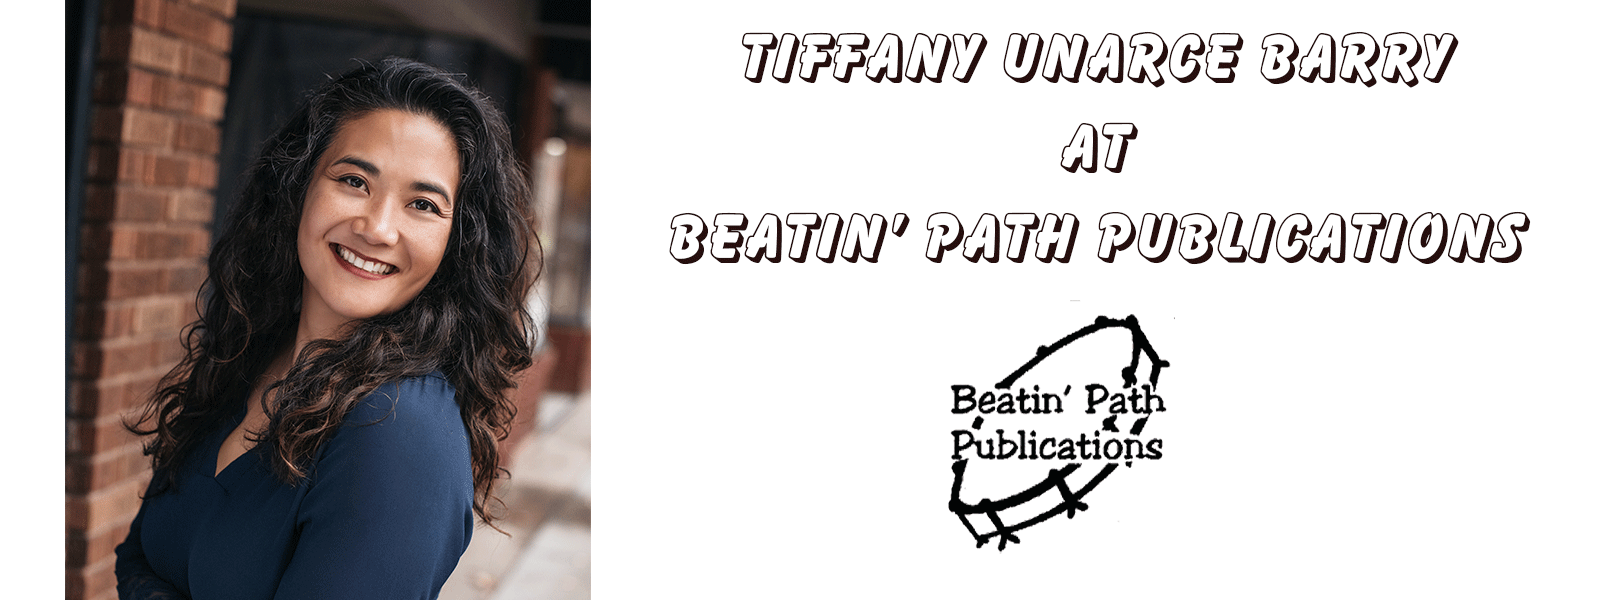 Tiffany Unarce Barry at Beatin' Path Publications